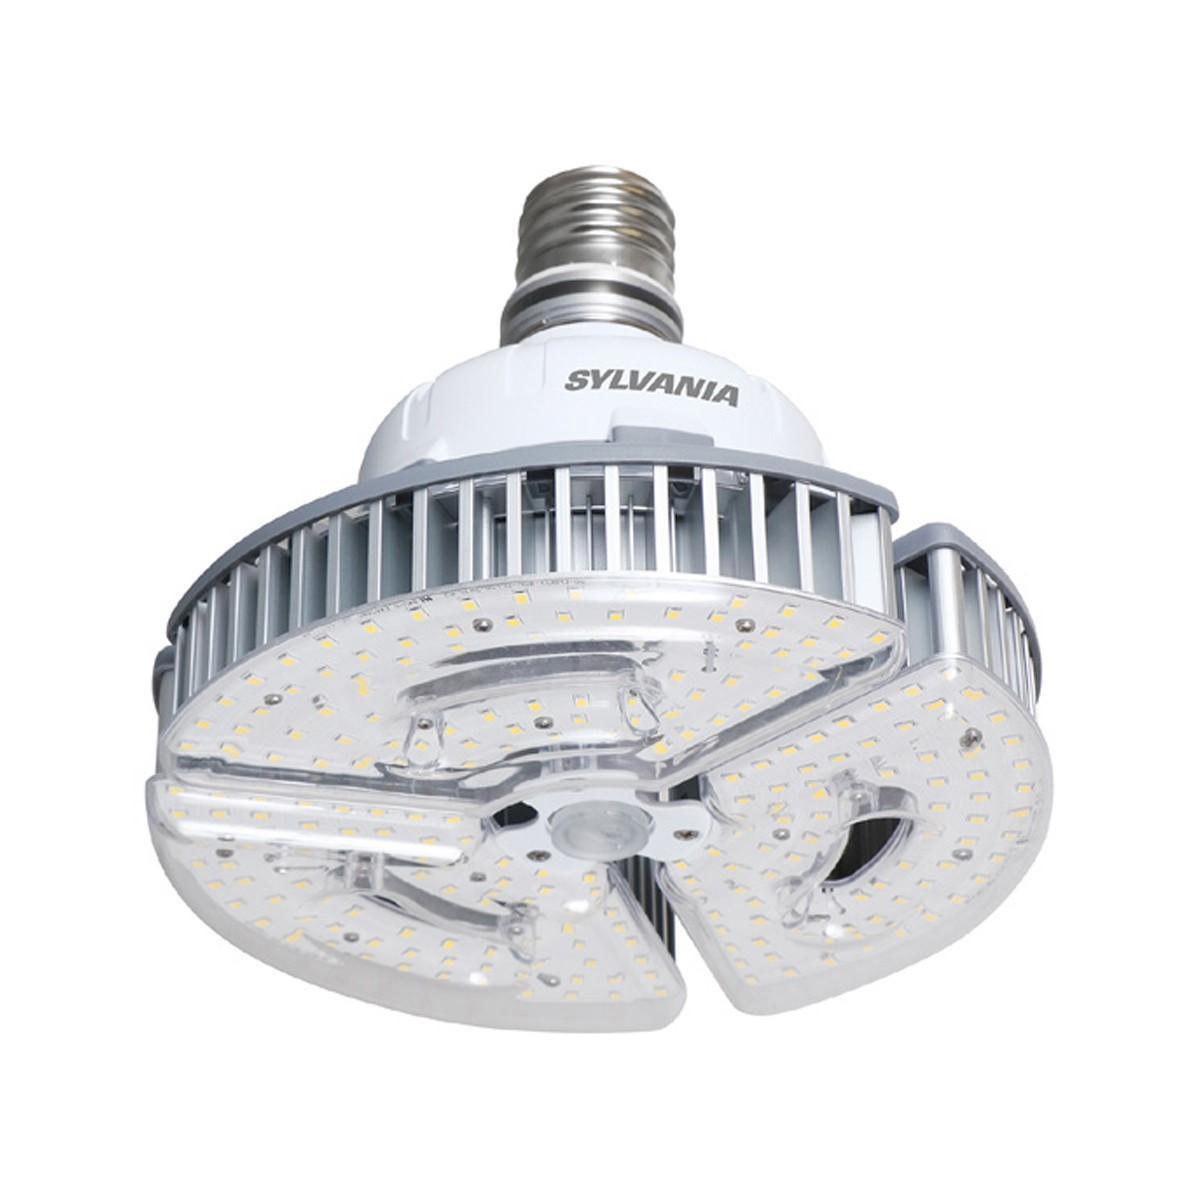 LED High Bay Retrofit Lamp, 120W, 16800 Lumens, 4000K, EX39 Mogul Extended Mogul Base, 120-277V - Bees Lighting